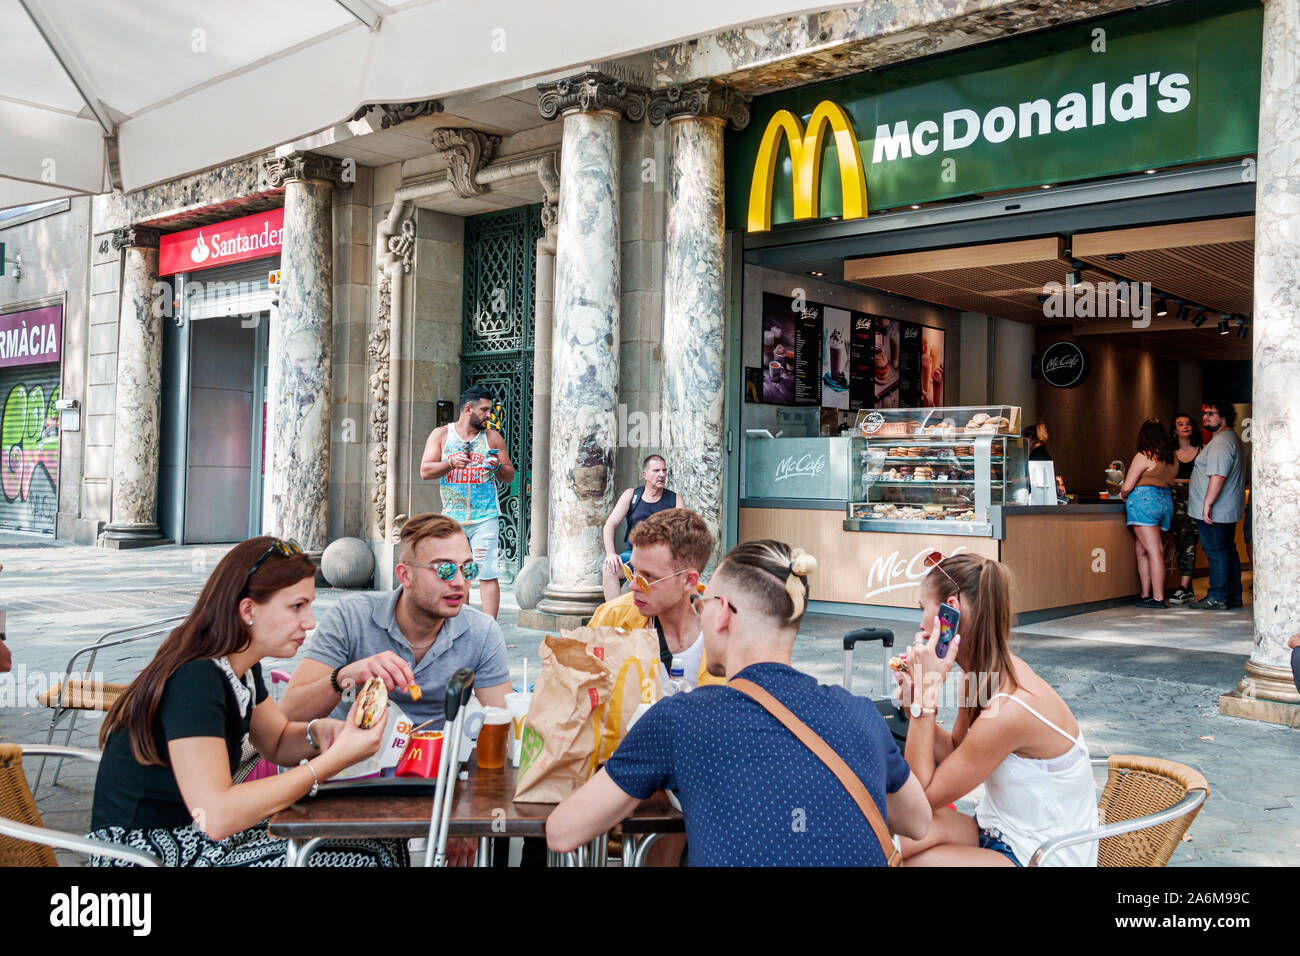 Barcelona Spain,Catalonia Passeig de Gracia,McDonald's, restaurant,fast food,outside,sidewalk table,al fresco dining,man,woman,young adults,friends,eat Stock Photo